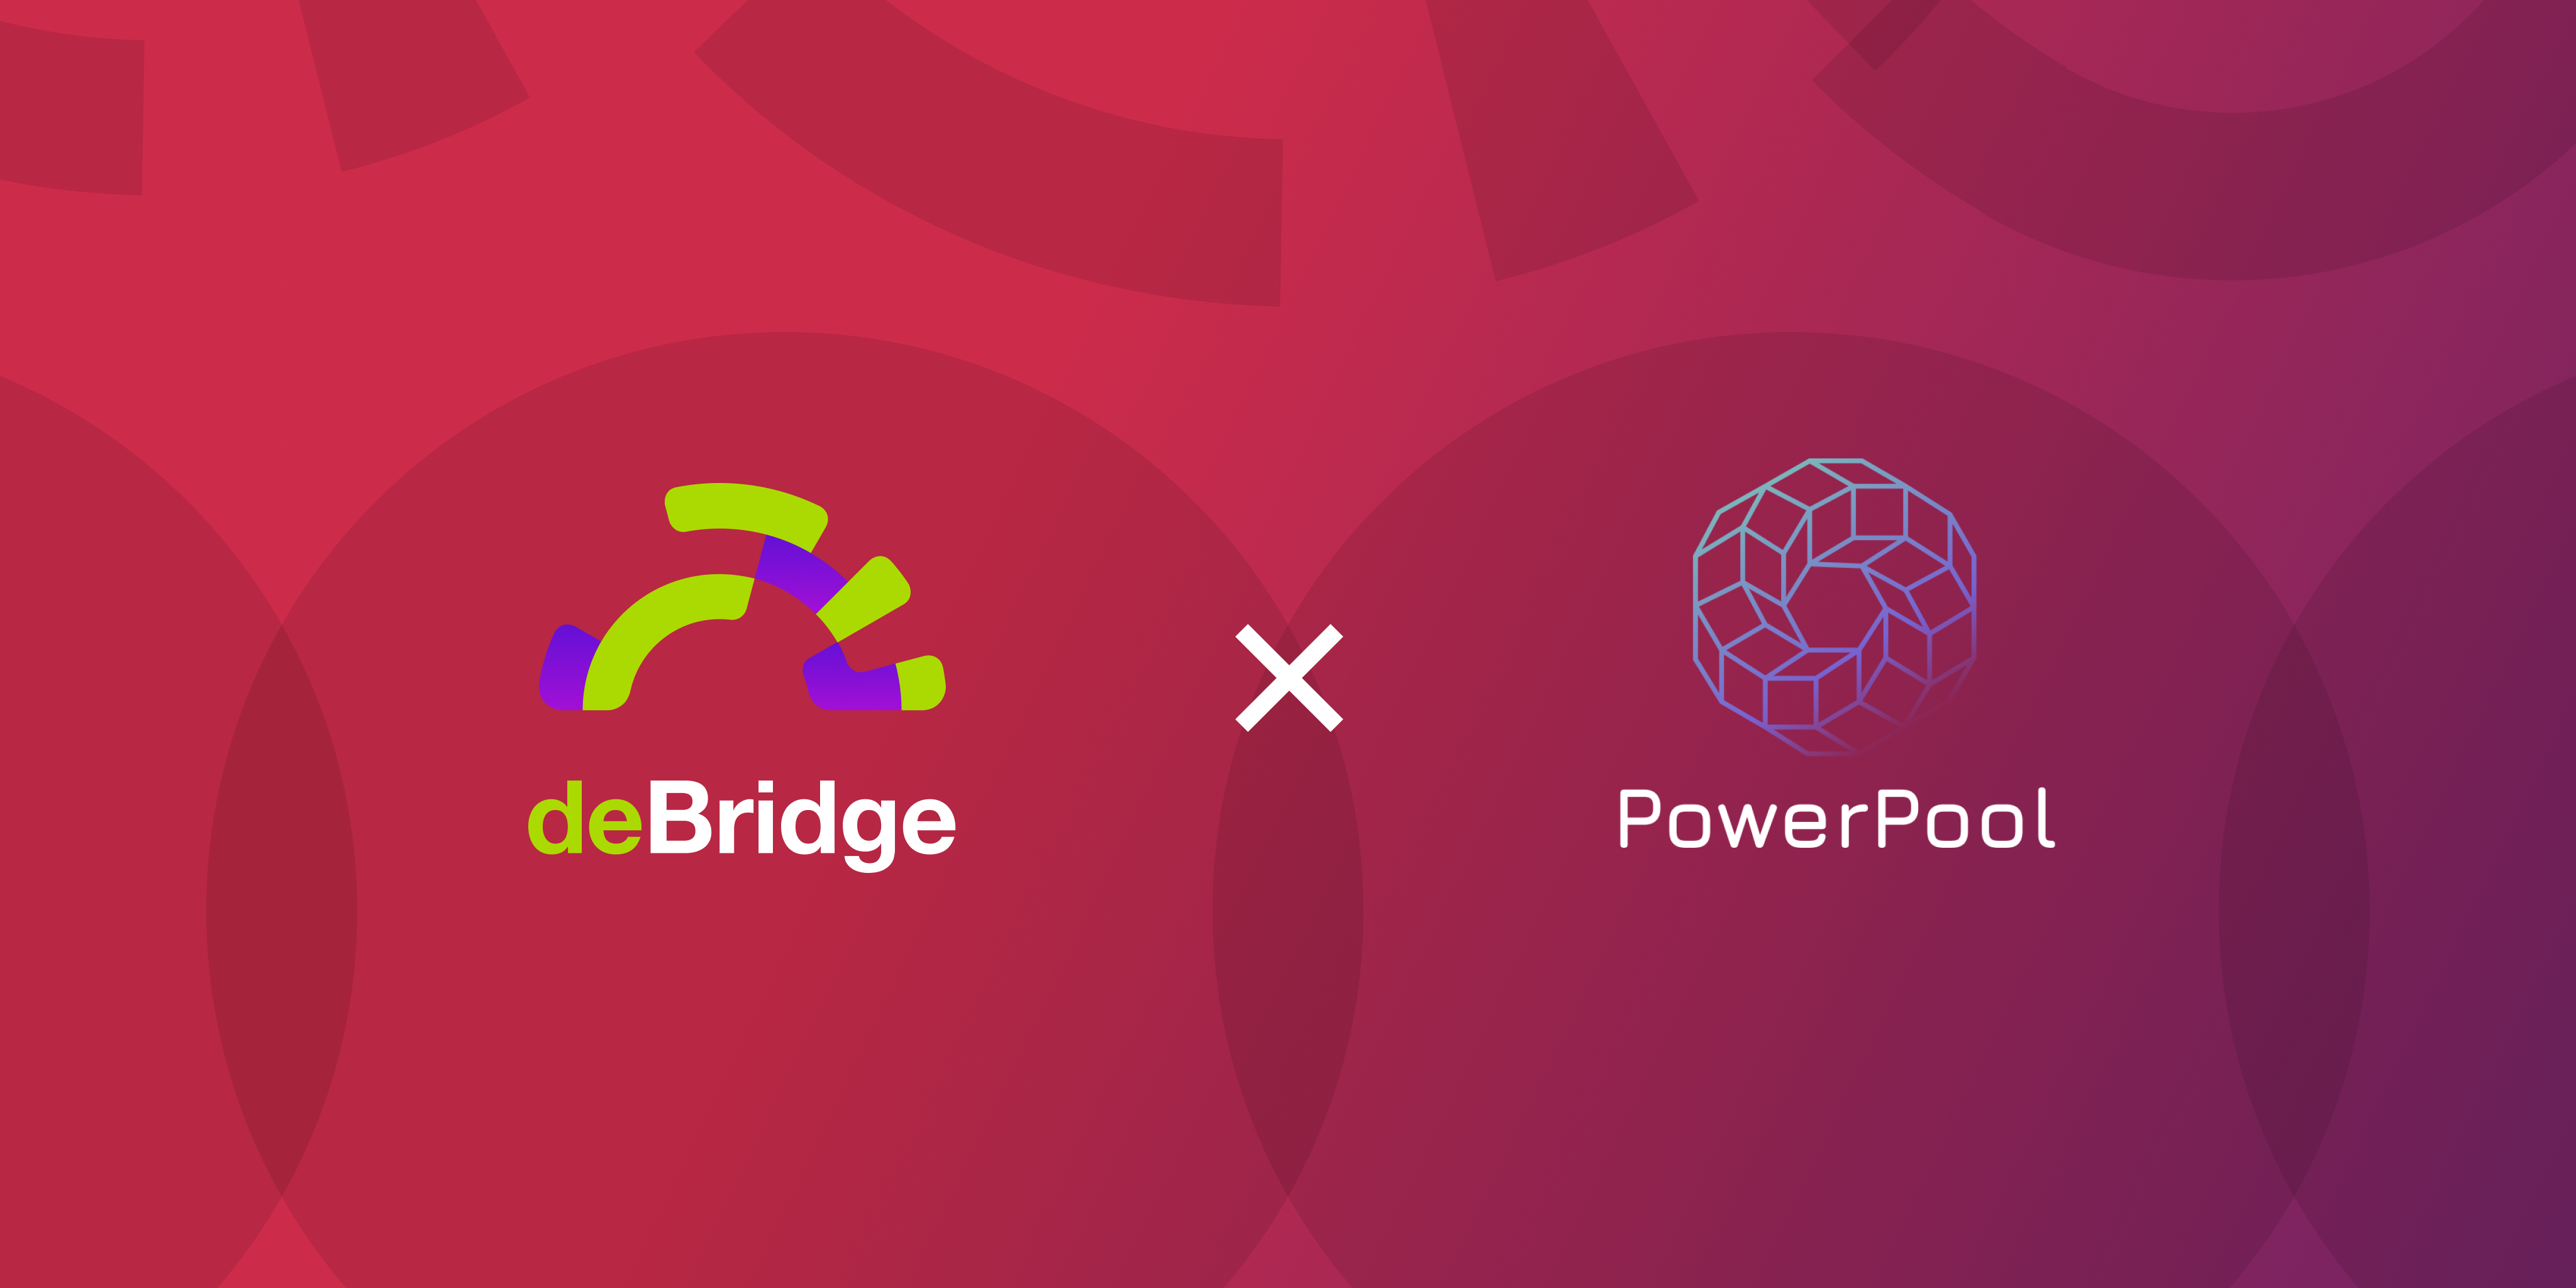 PowerPool integrates deBridge to enable cross-chain operations for CVP token